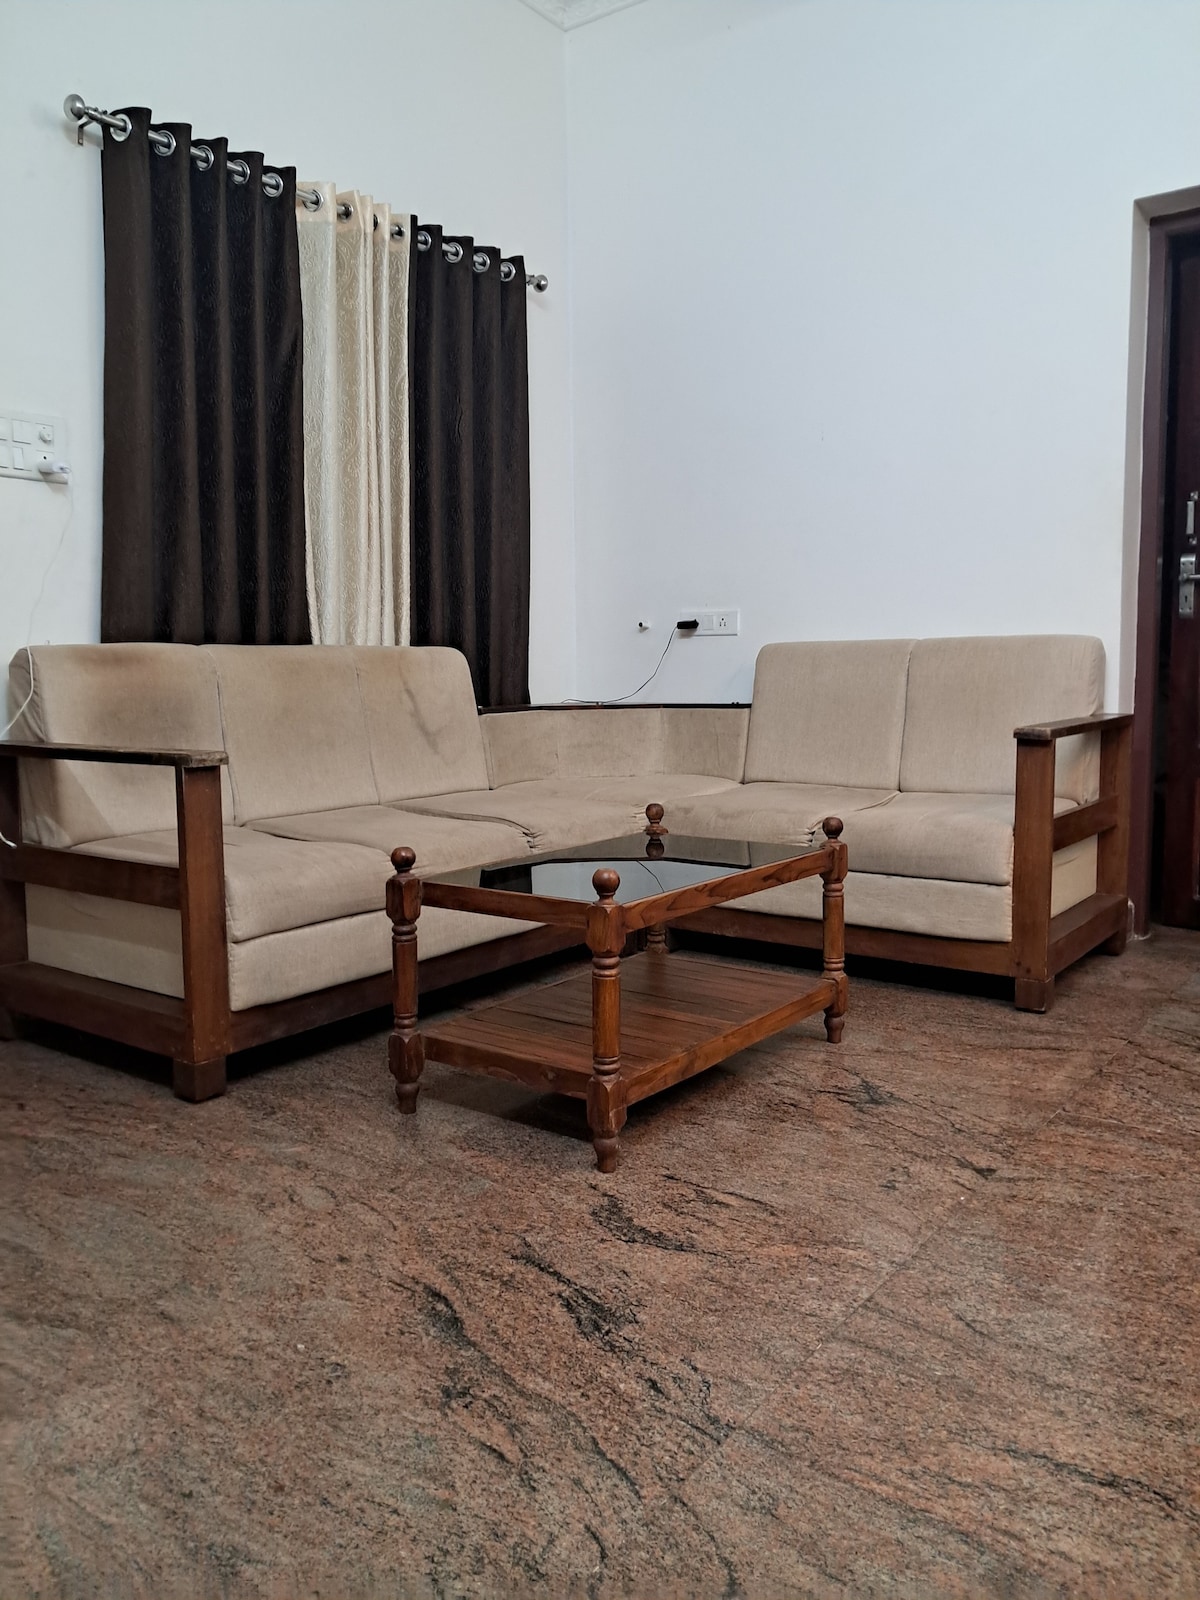 3 BHK Luxury Homefeel stay near Cochin Airport